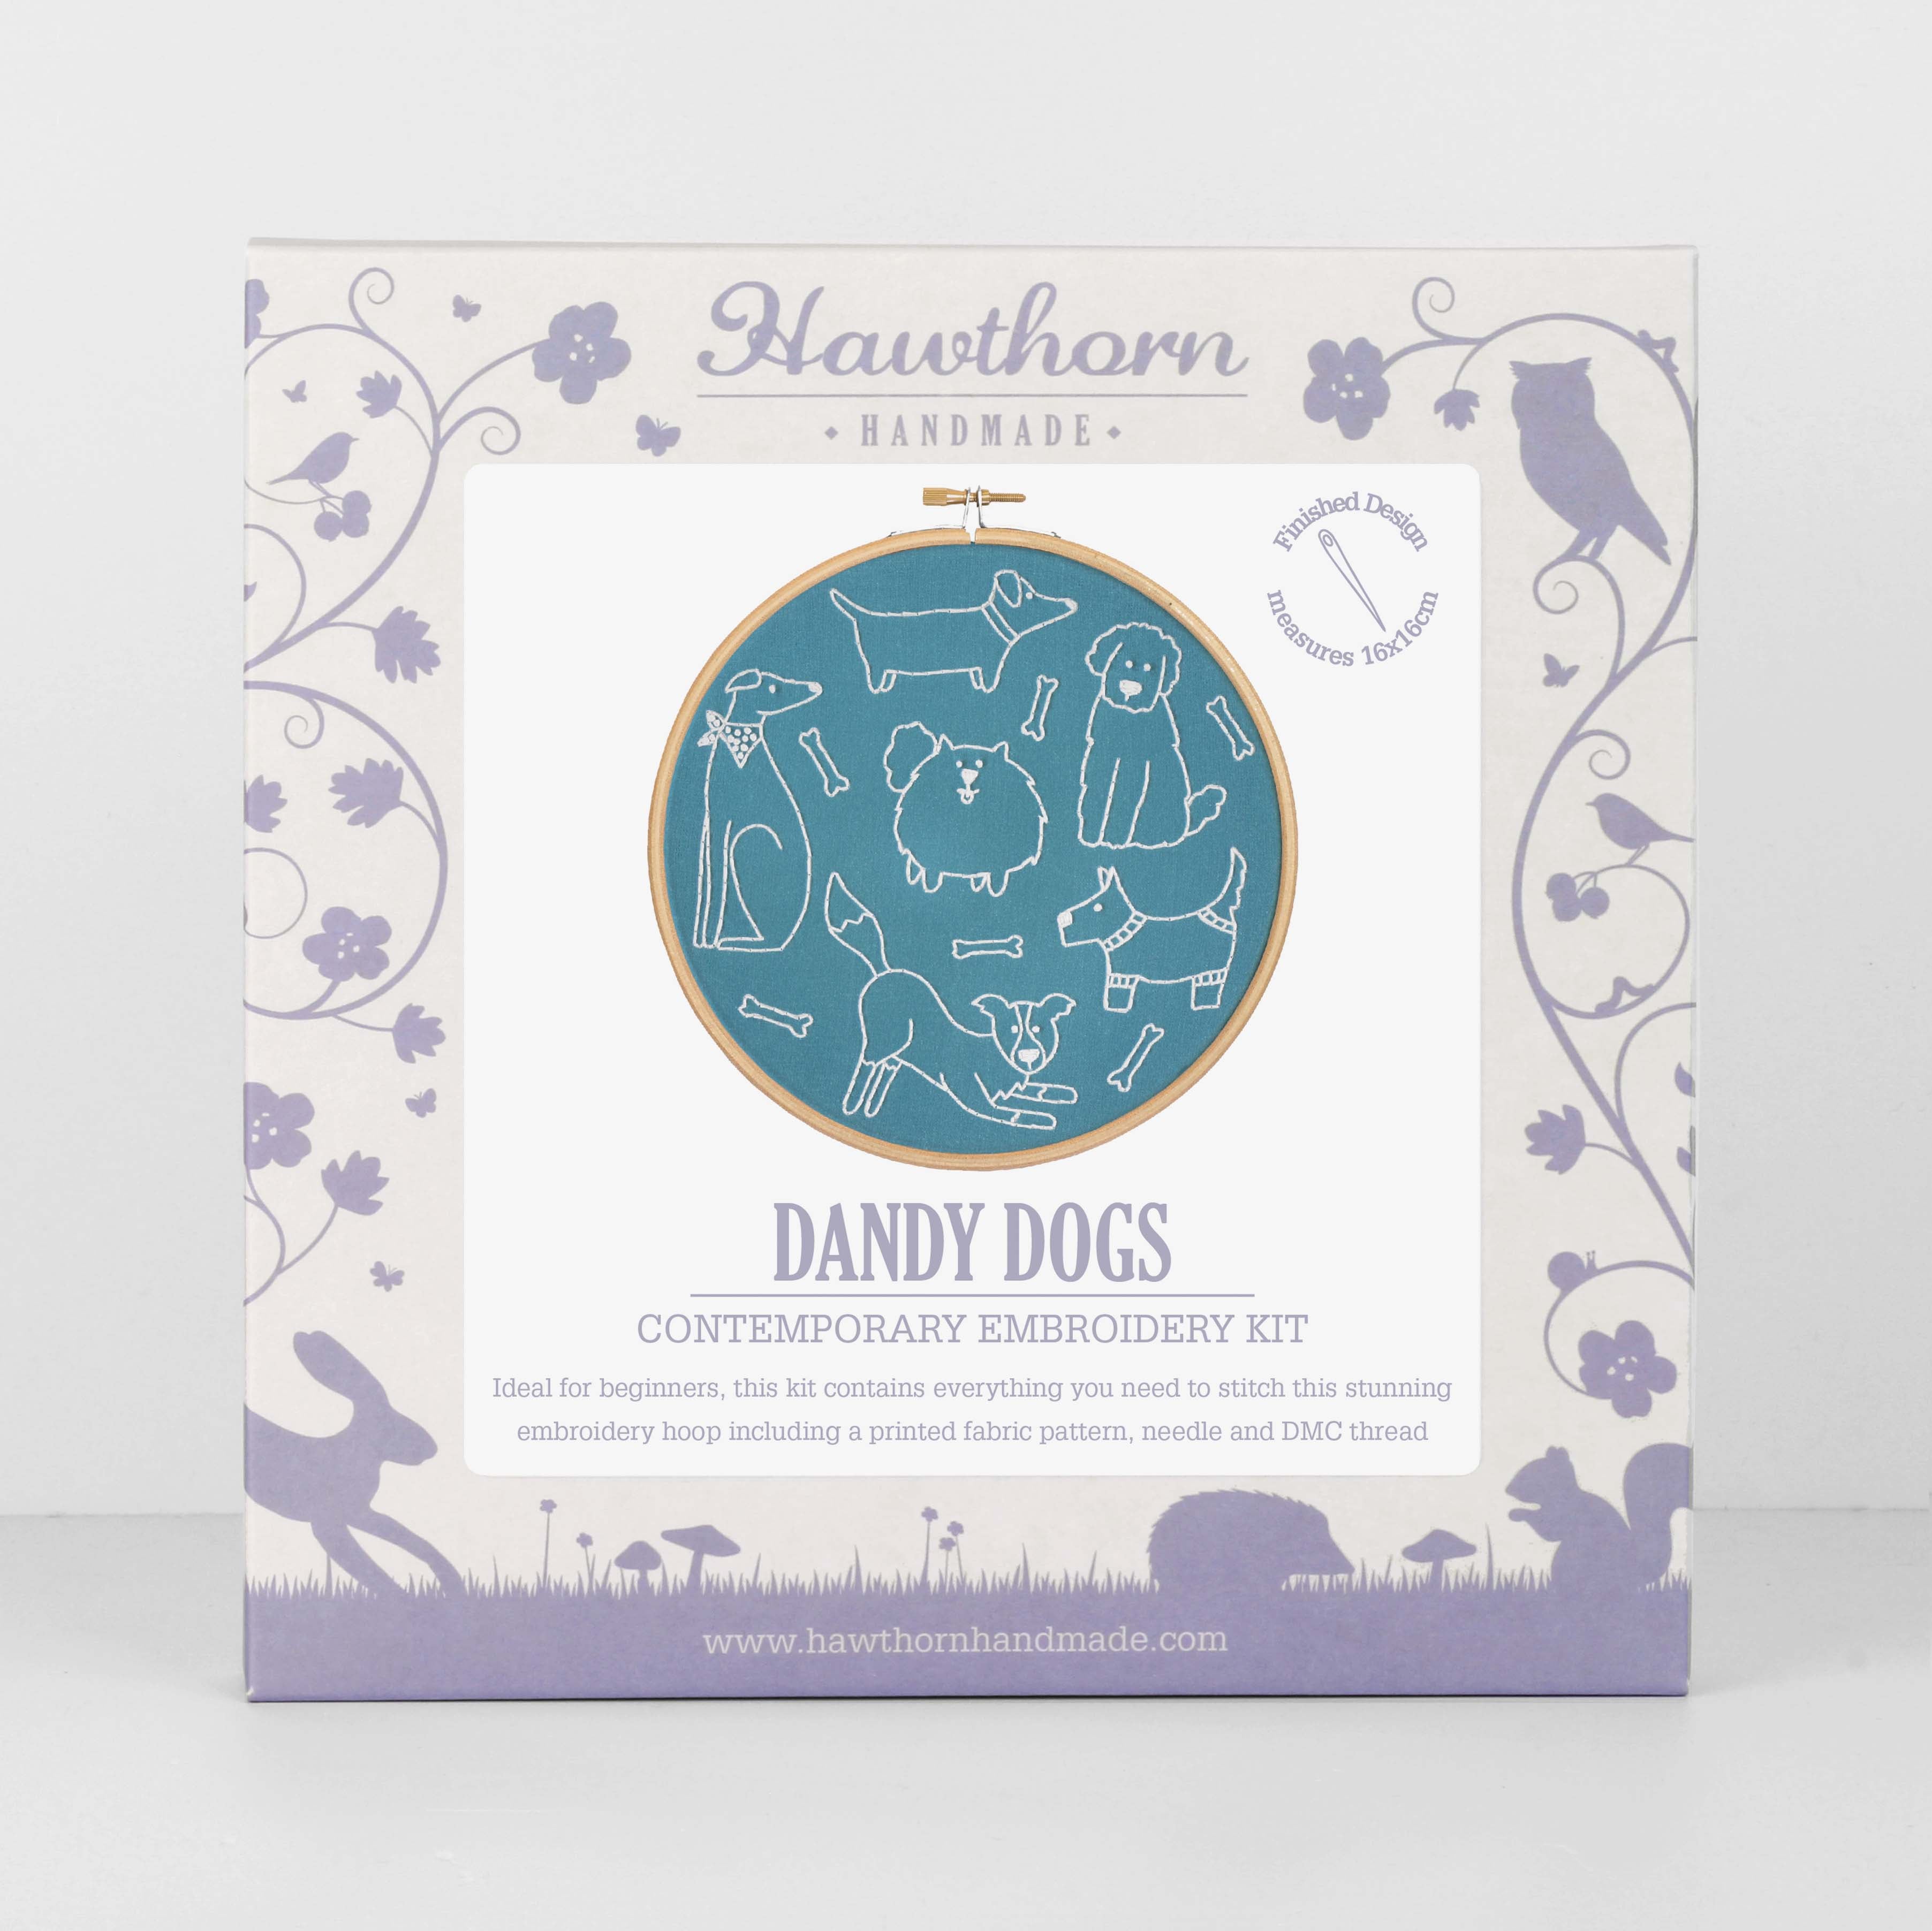 Dandy Dogs Embroidery Kit, Hawthorn Handmade